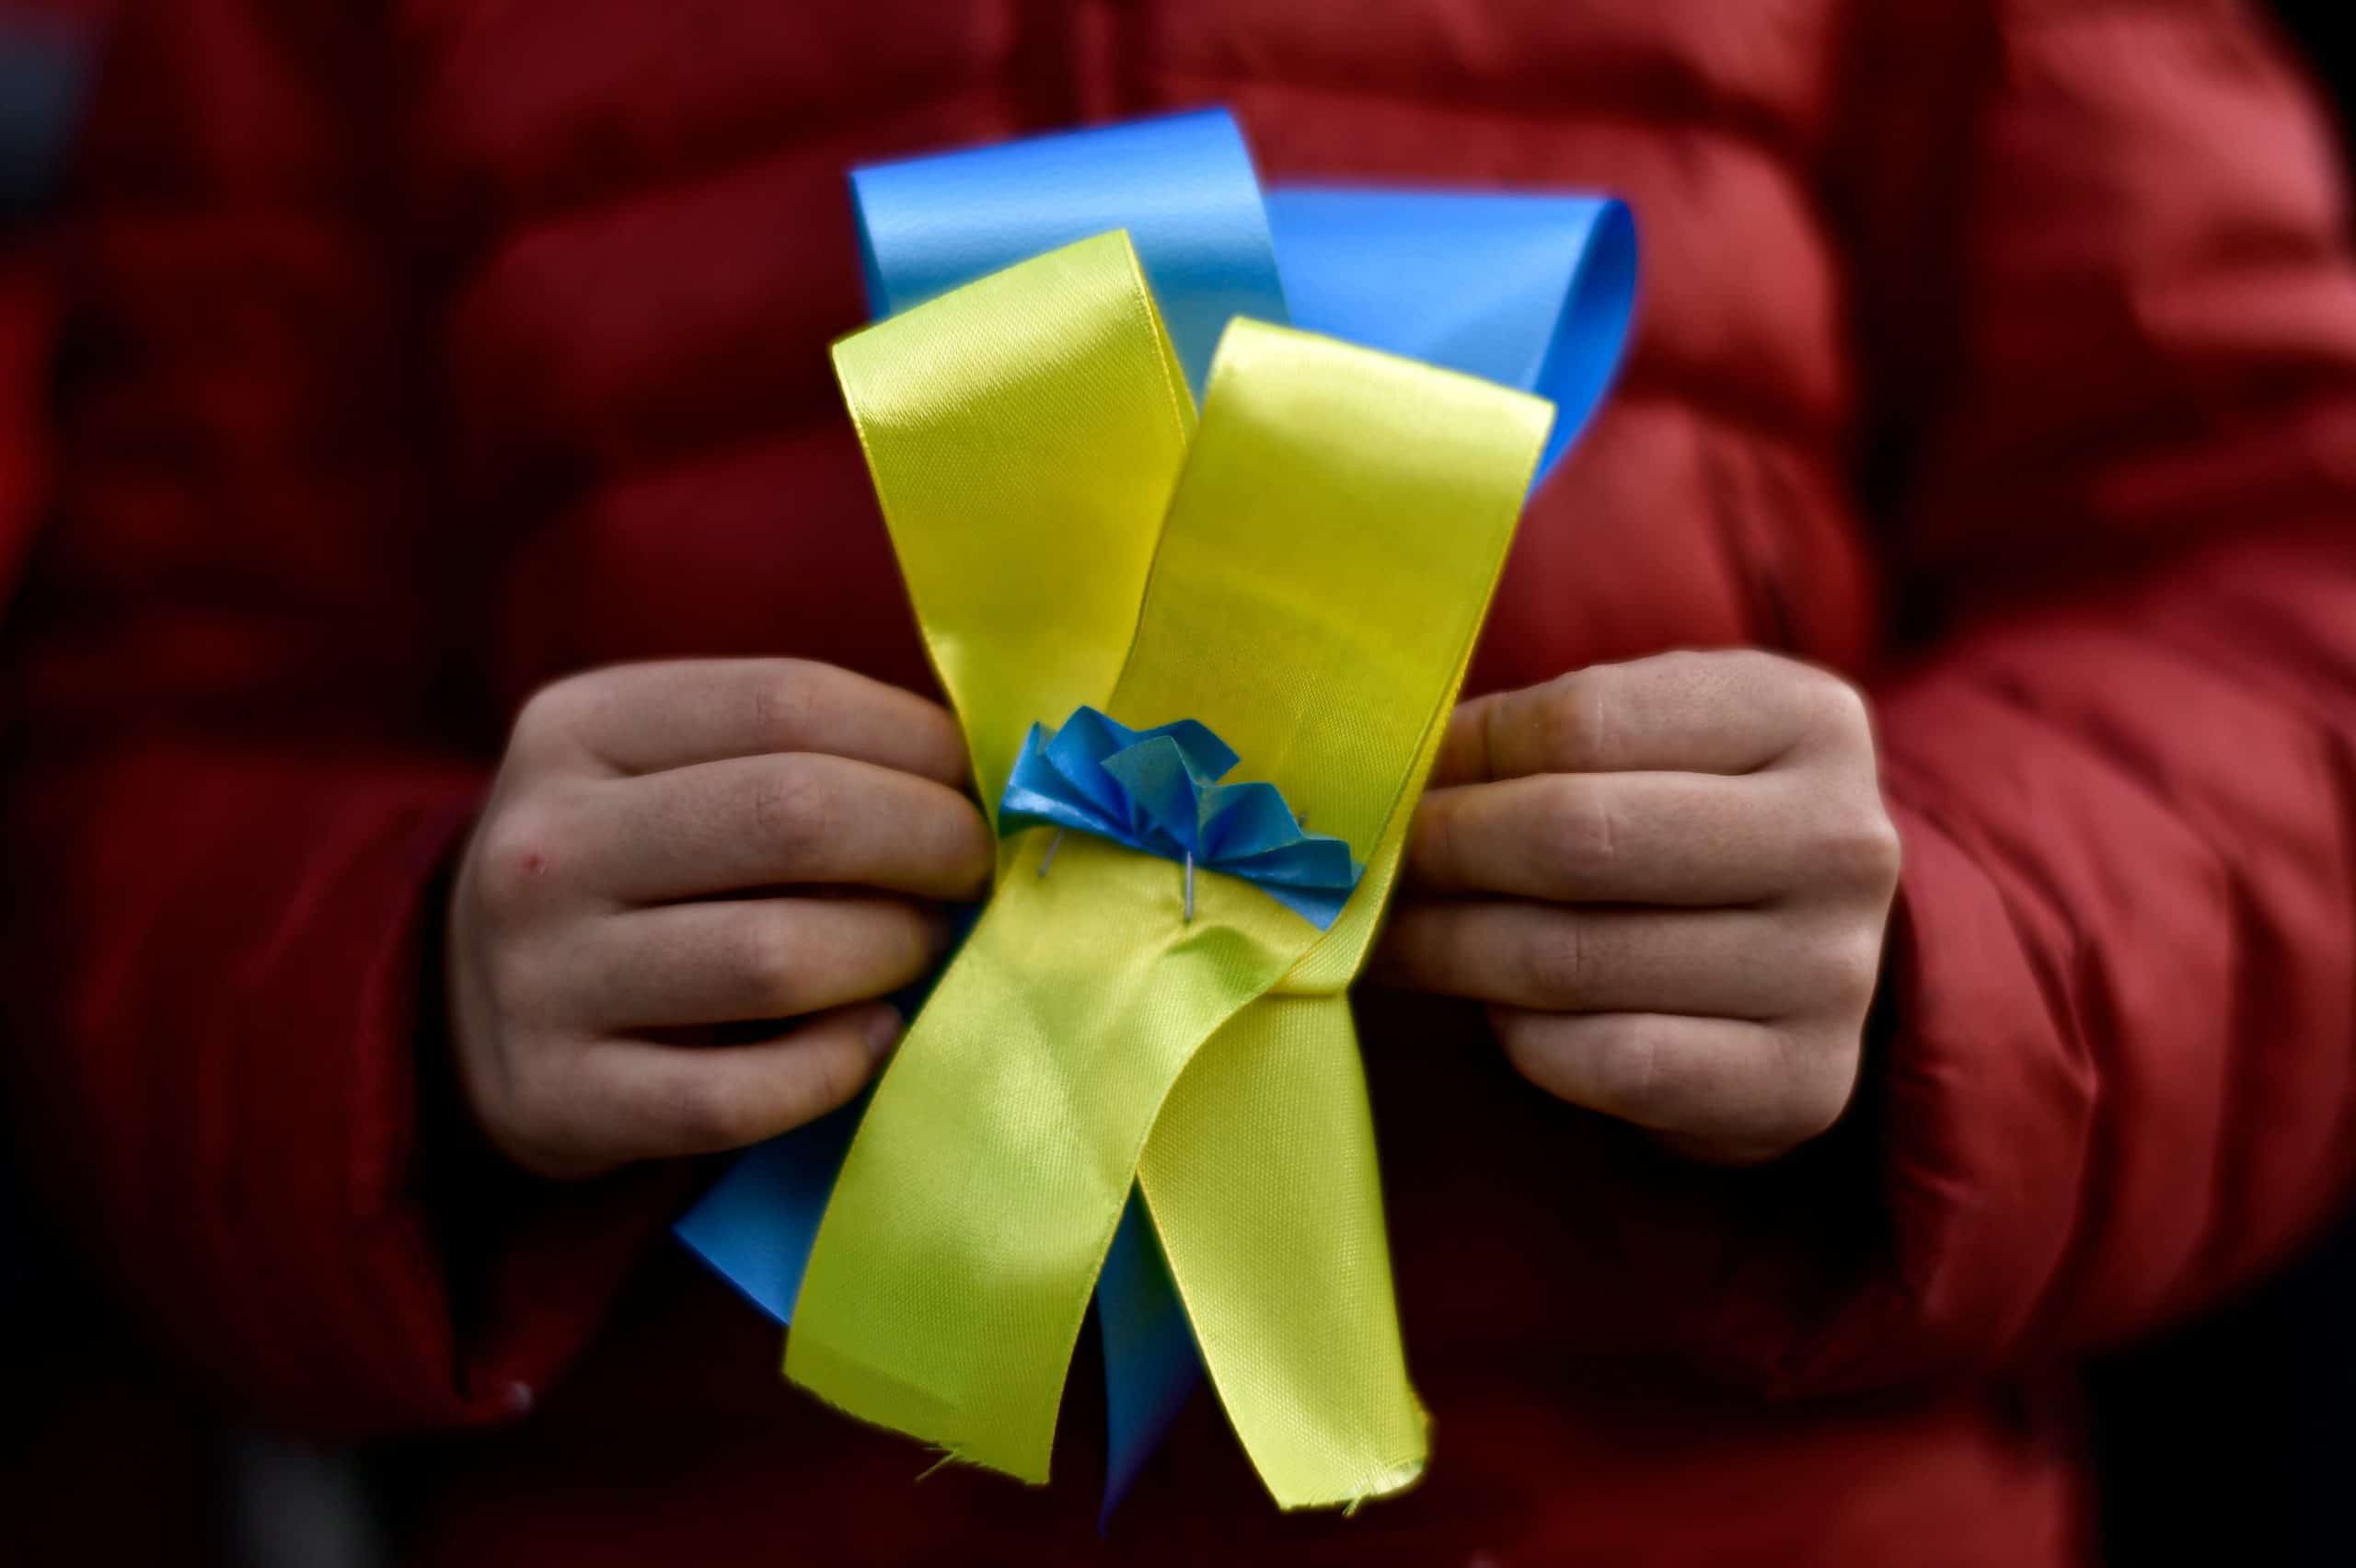 Watch: Ukrainian children on first day at school enter nervously…You won’t believe what Italian kids did next